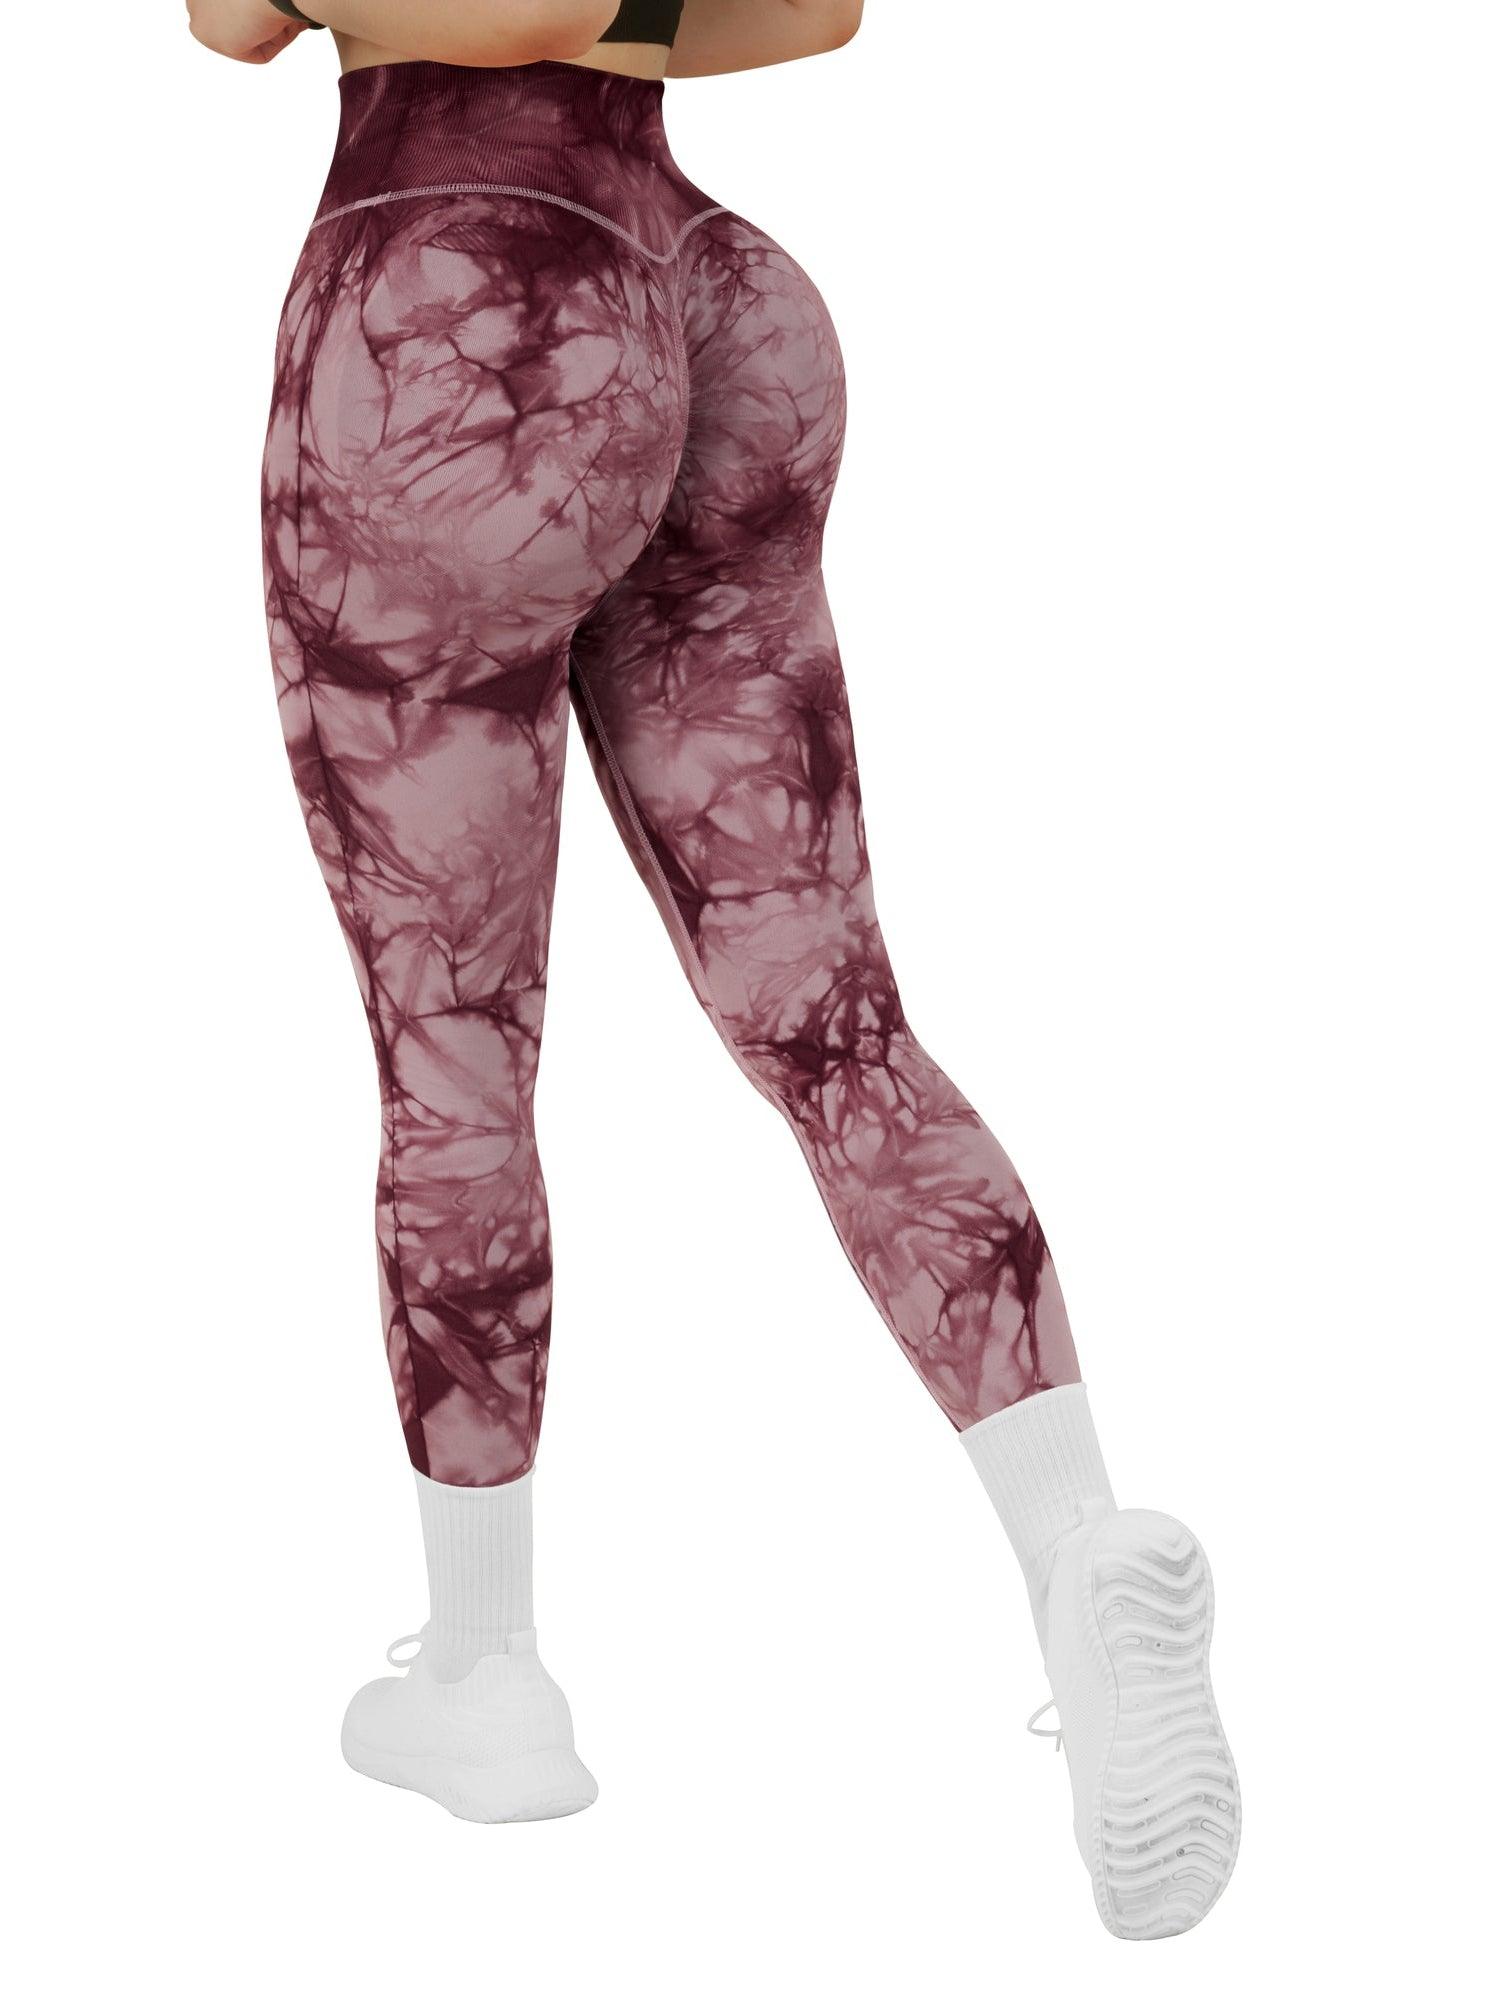 Legging Full Length Crazy Print - Amni, Pink Tie Dye